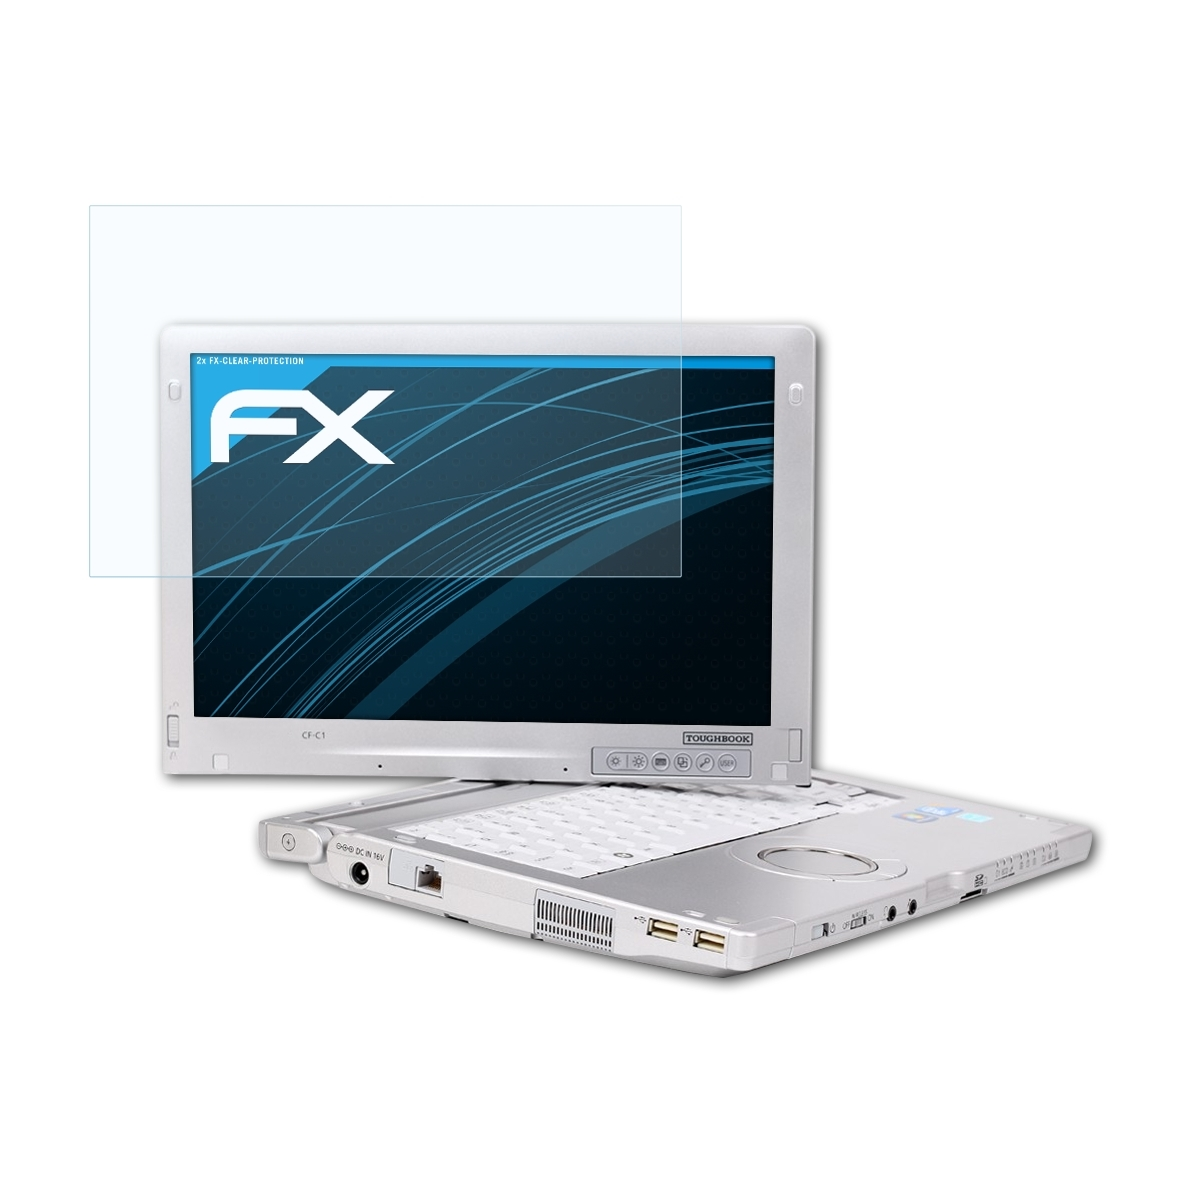 ATFOLIX 2x FX-Clear Displayschutz(für CF-C1) Panasonic ToughBook